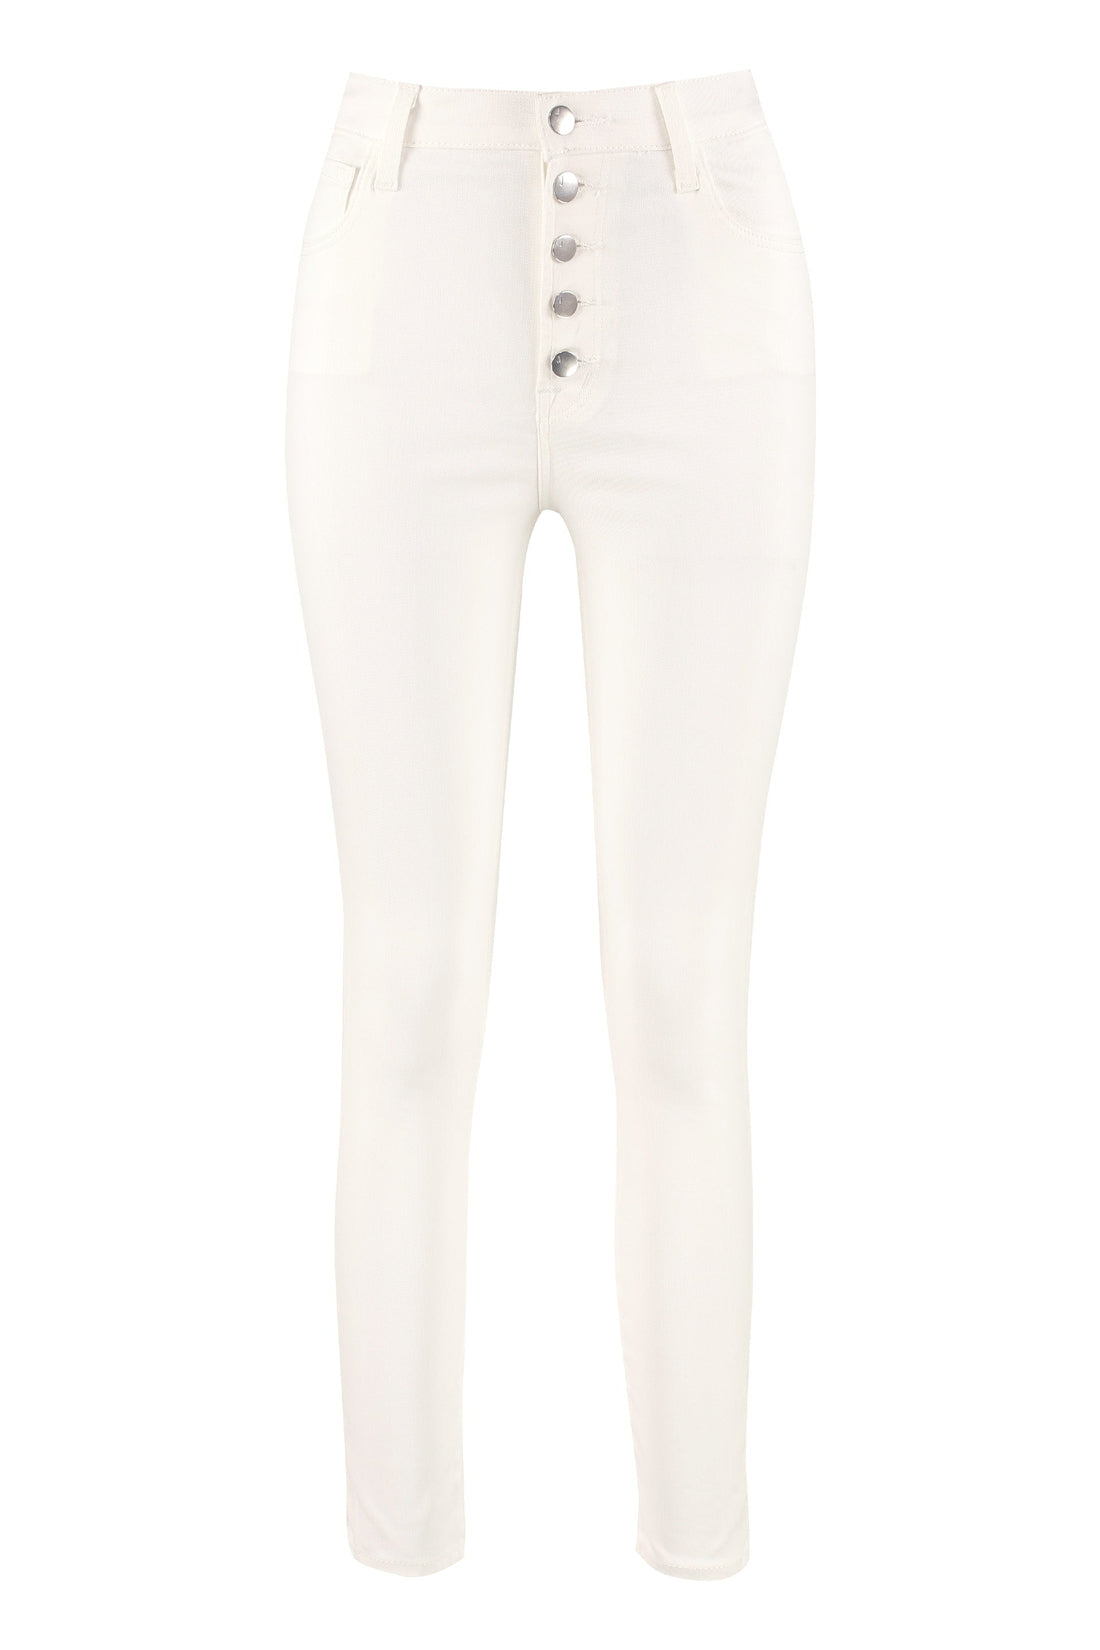 J Brand-OUTLET-SALE-Lillie cropped skinny jeans-ARCHIVIST